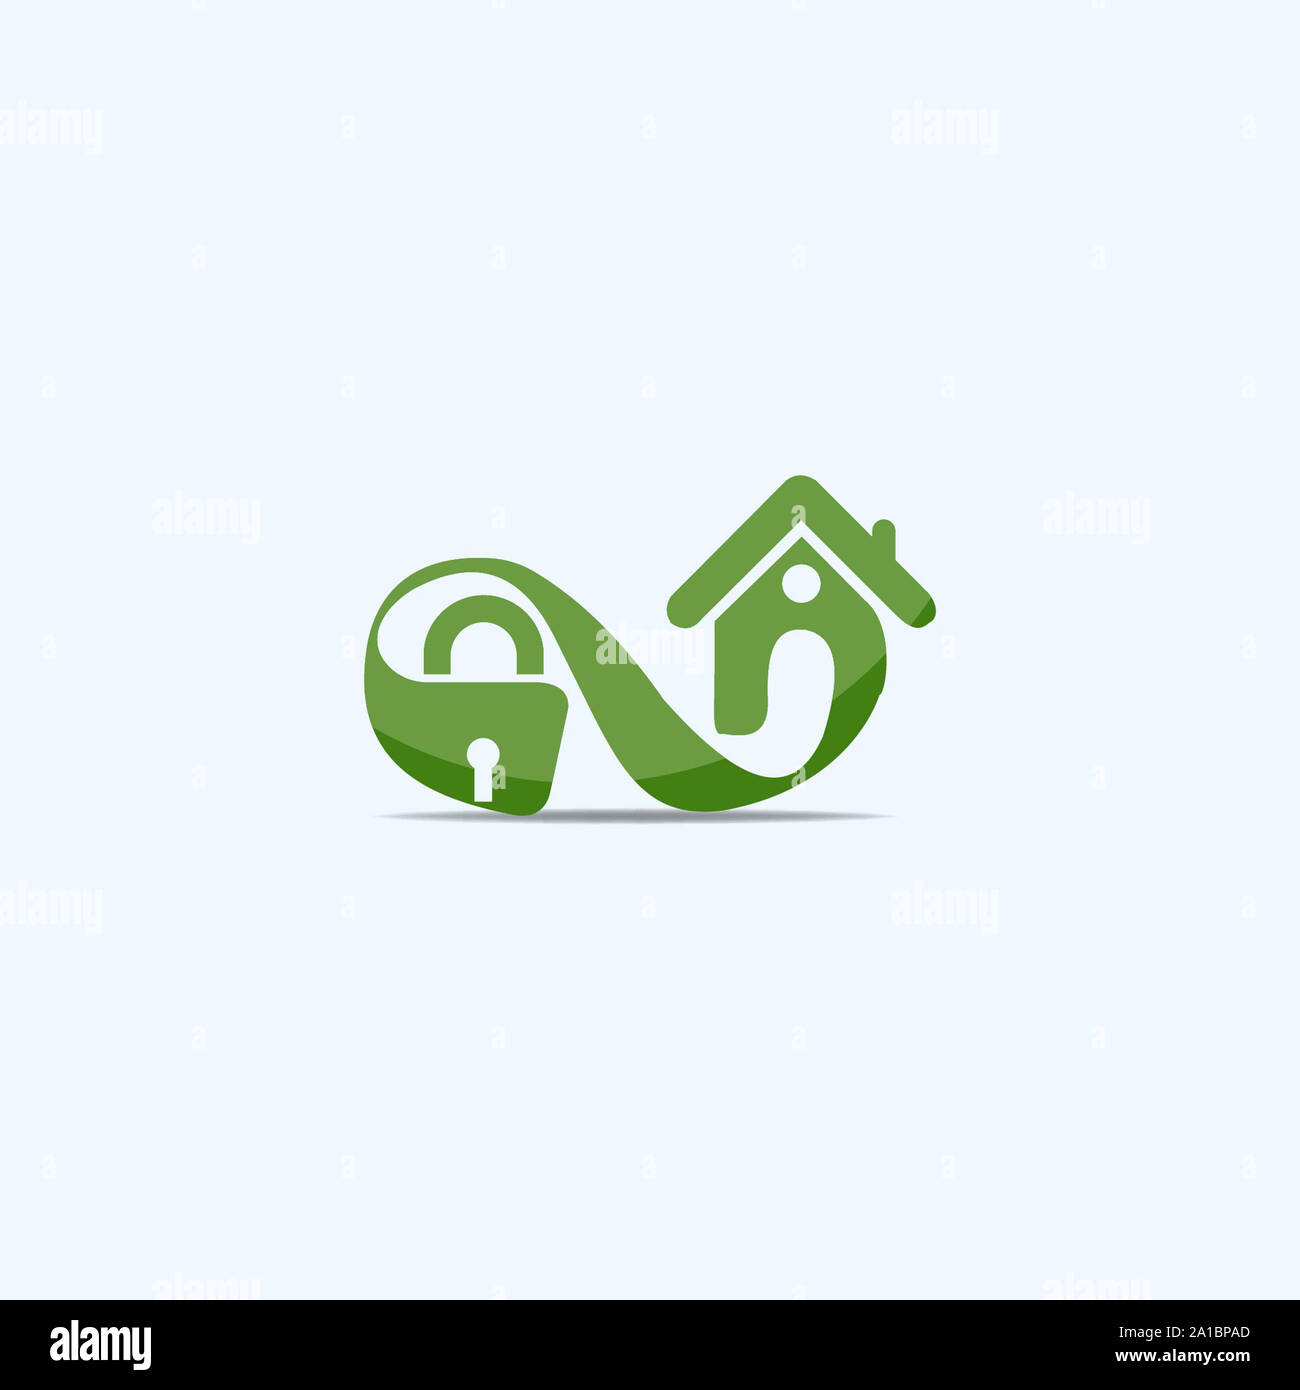 Home Secure Logo Design Template Stock Photo